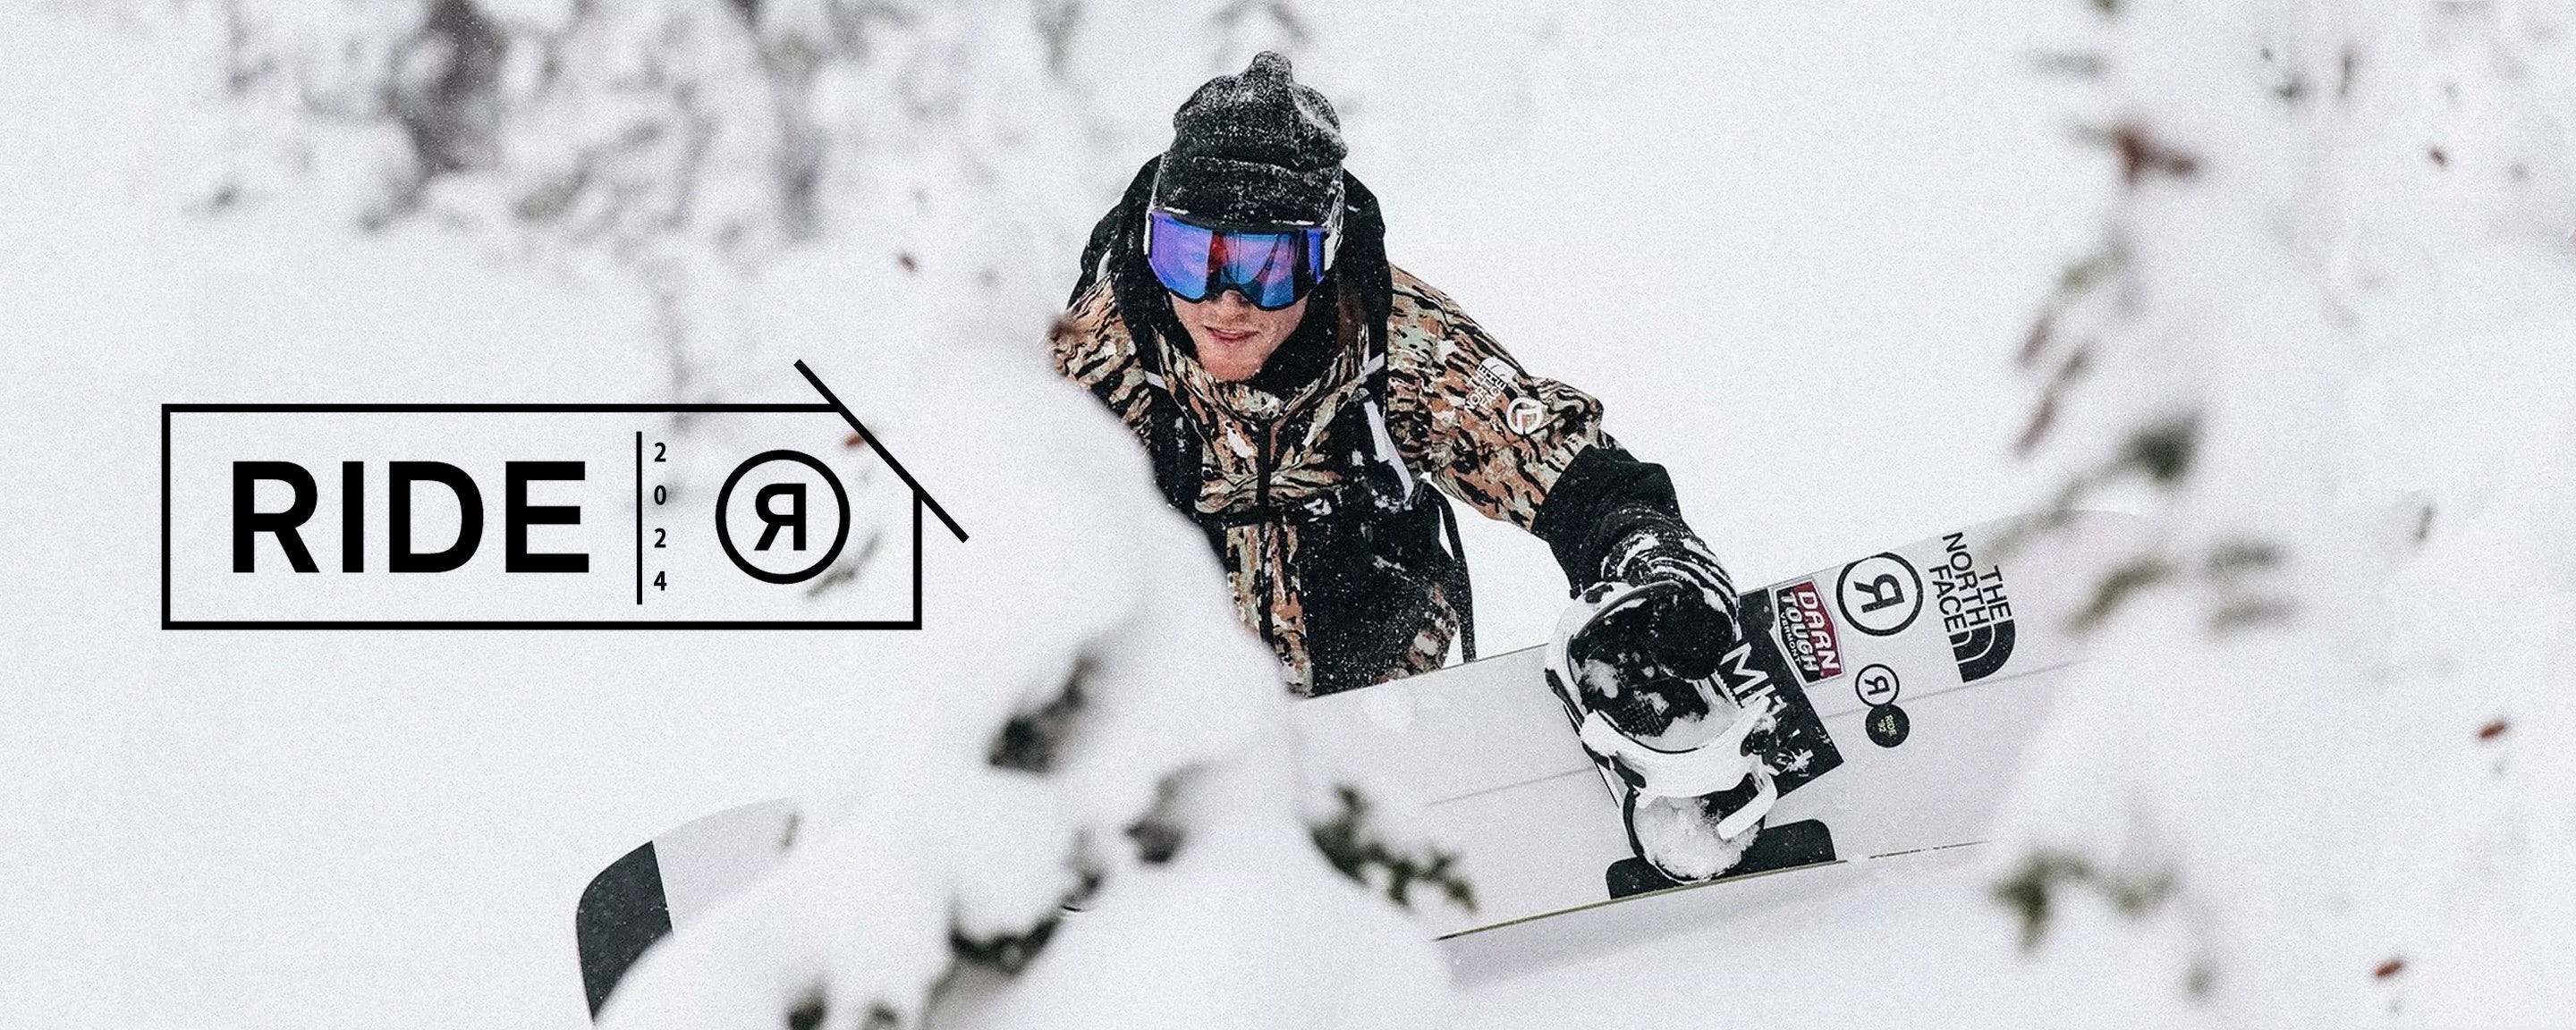 online snowboard retailers